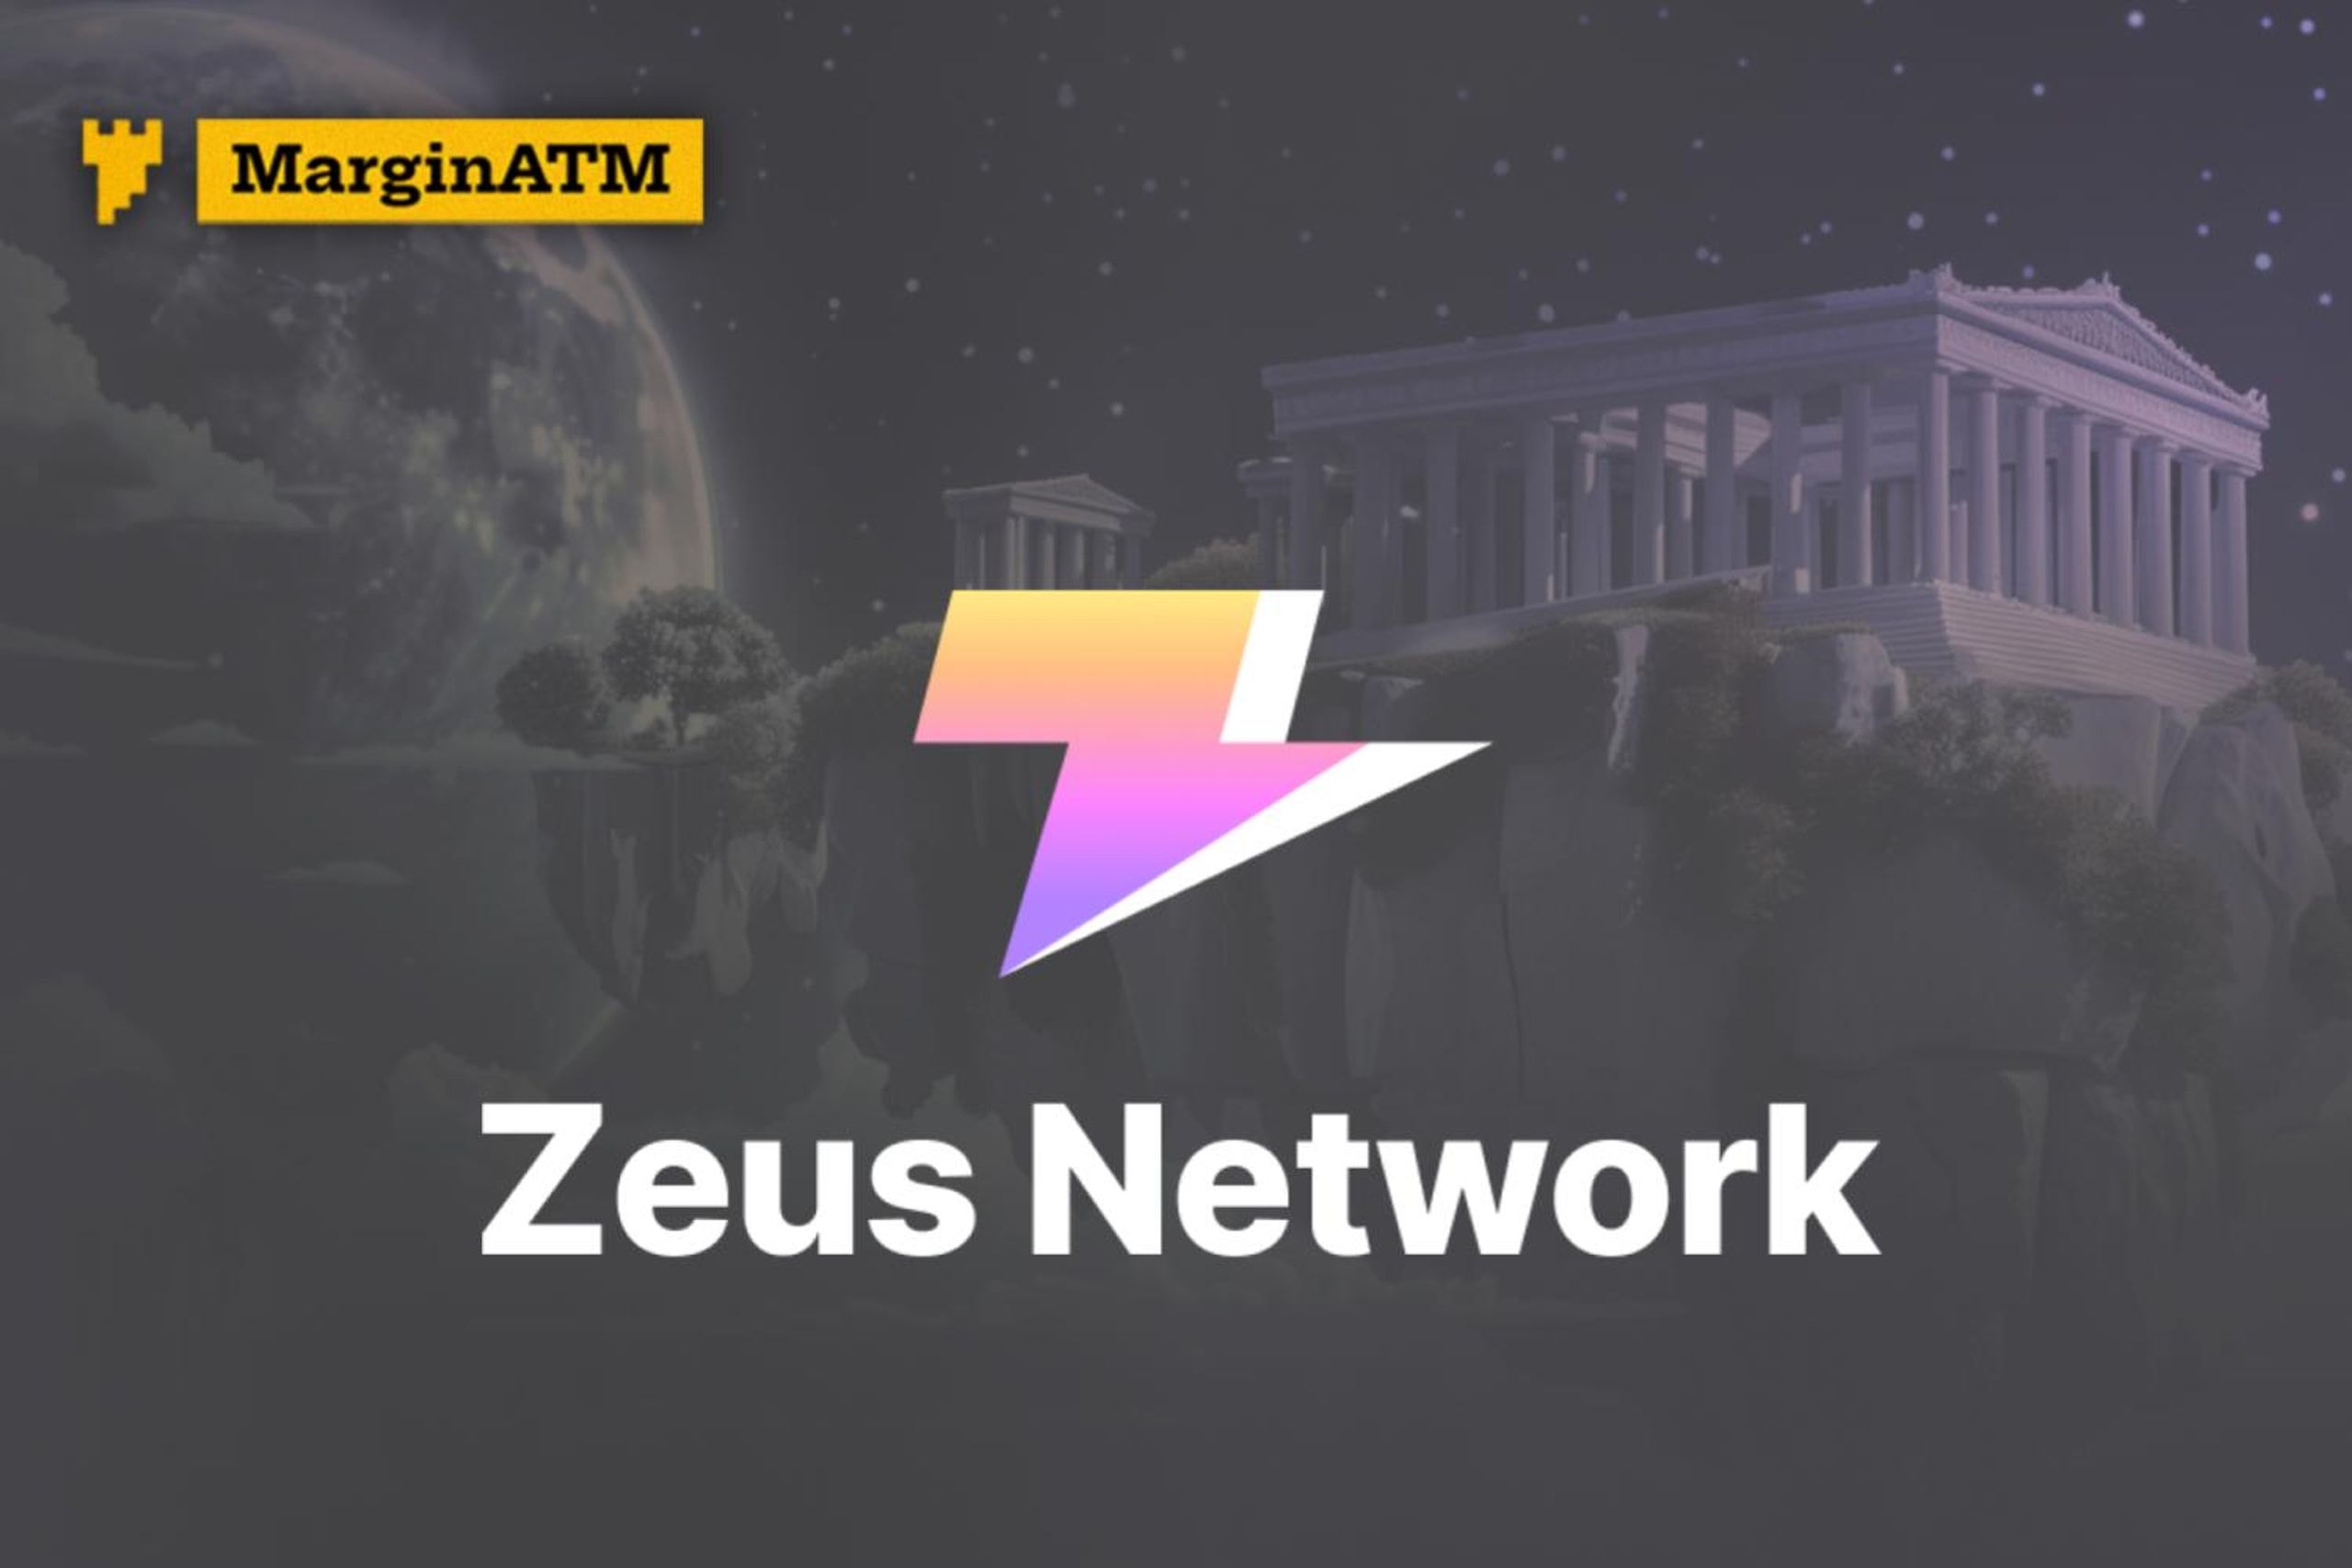 zeus network huy động 8 triệu usd